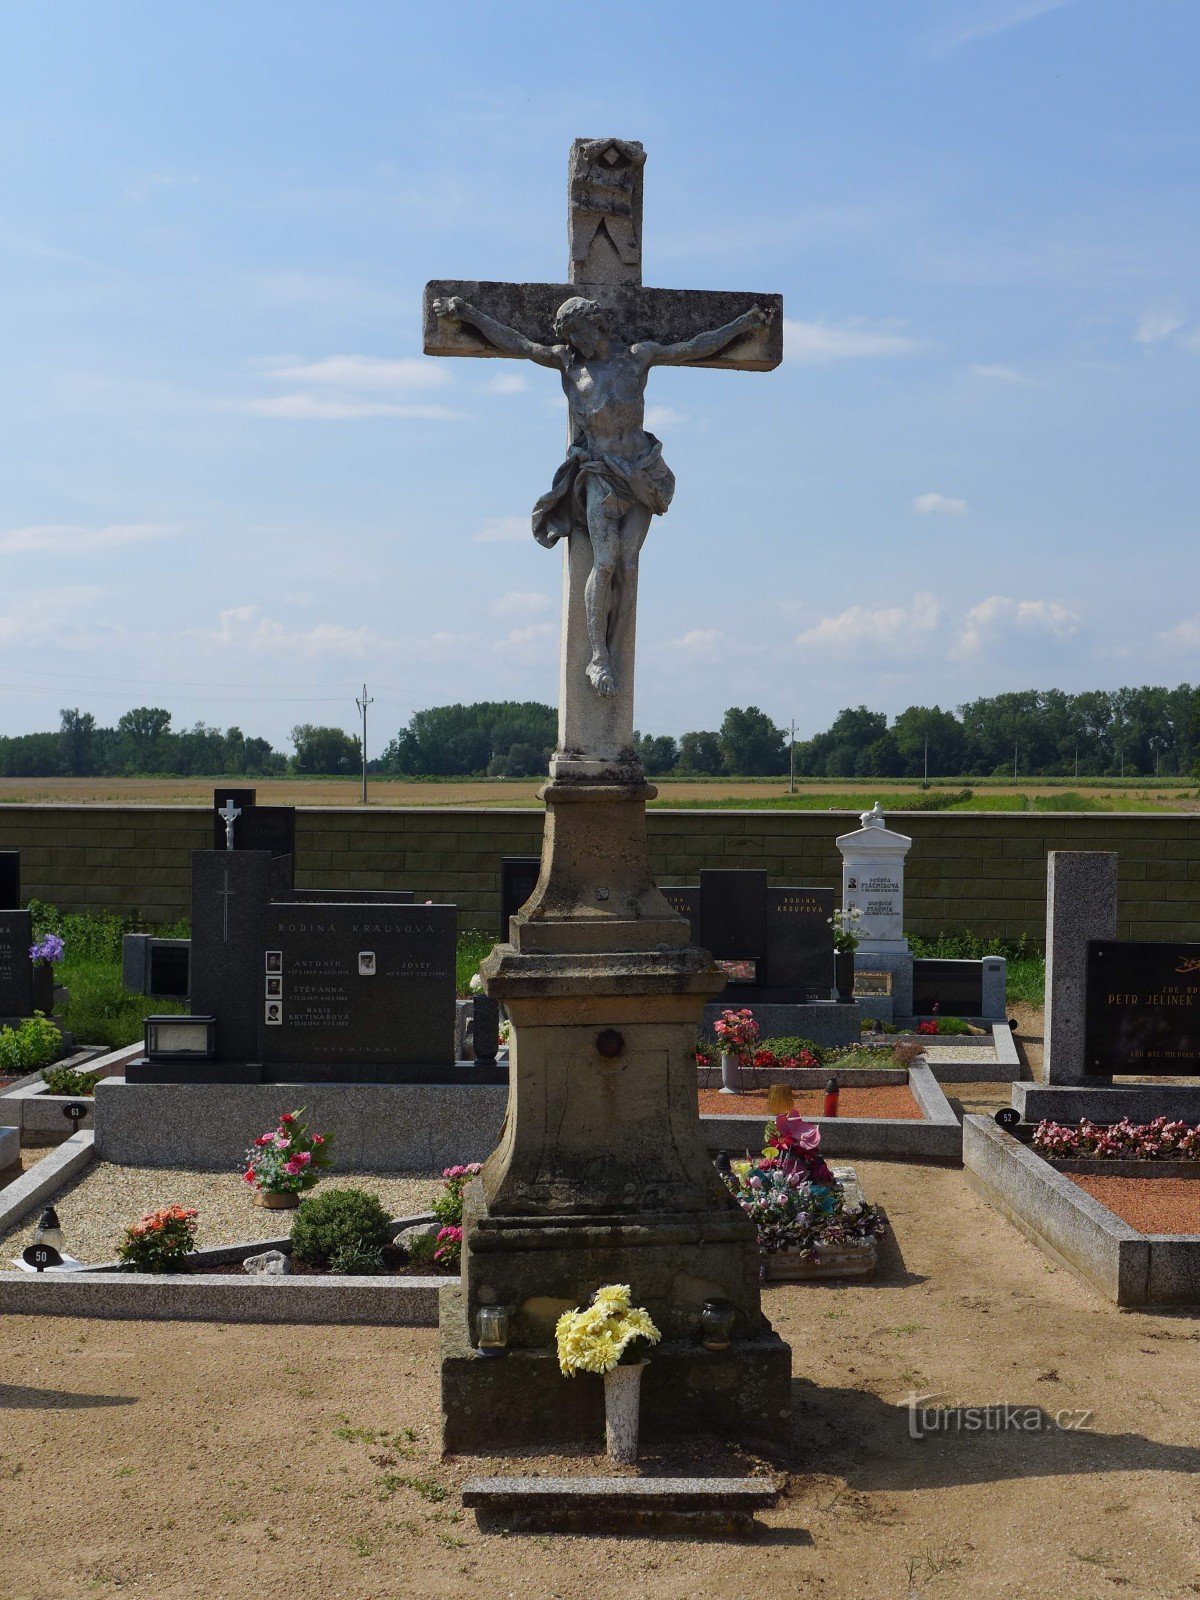 Nemčičky - cruce centrală în cimitir